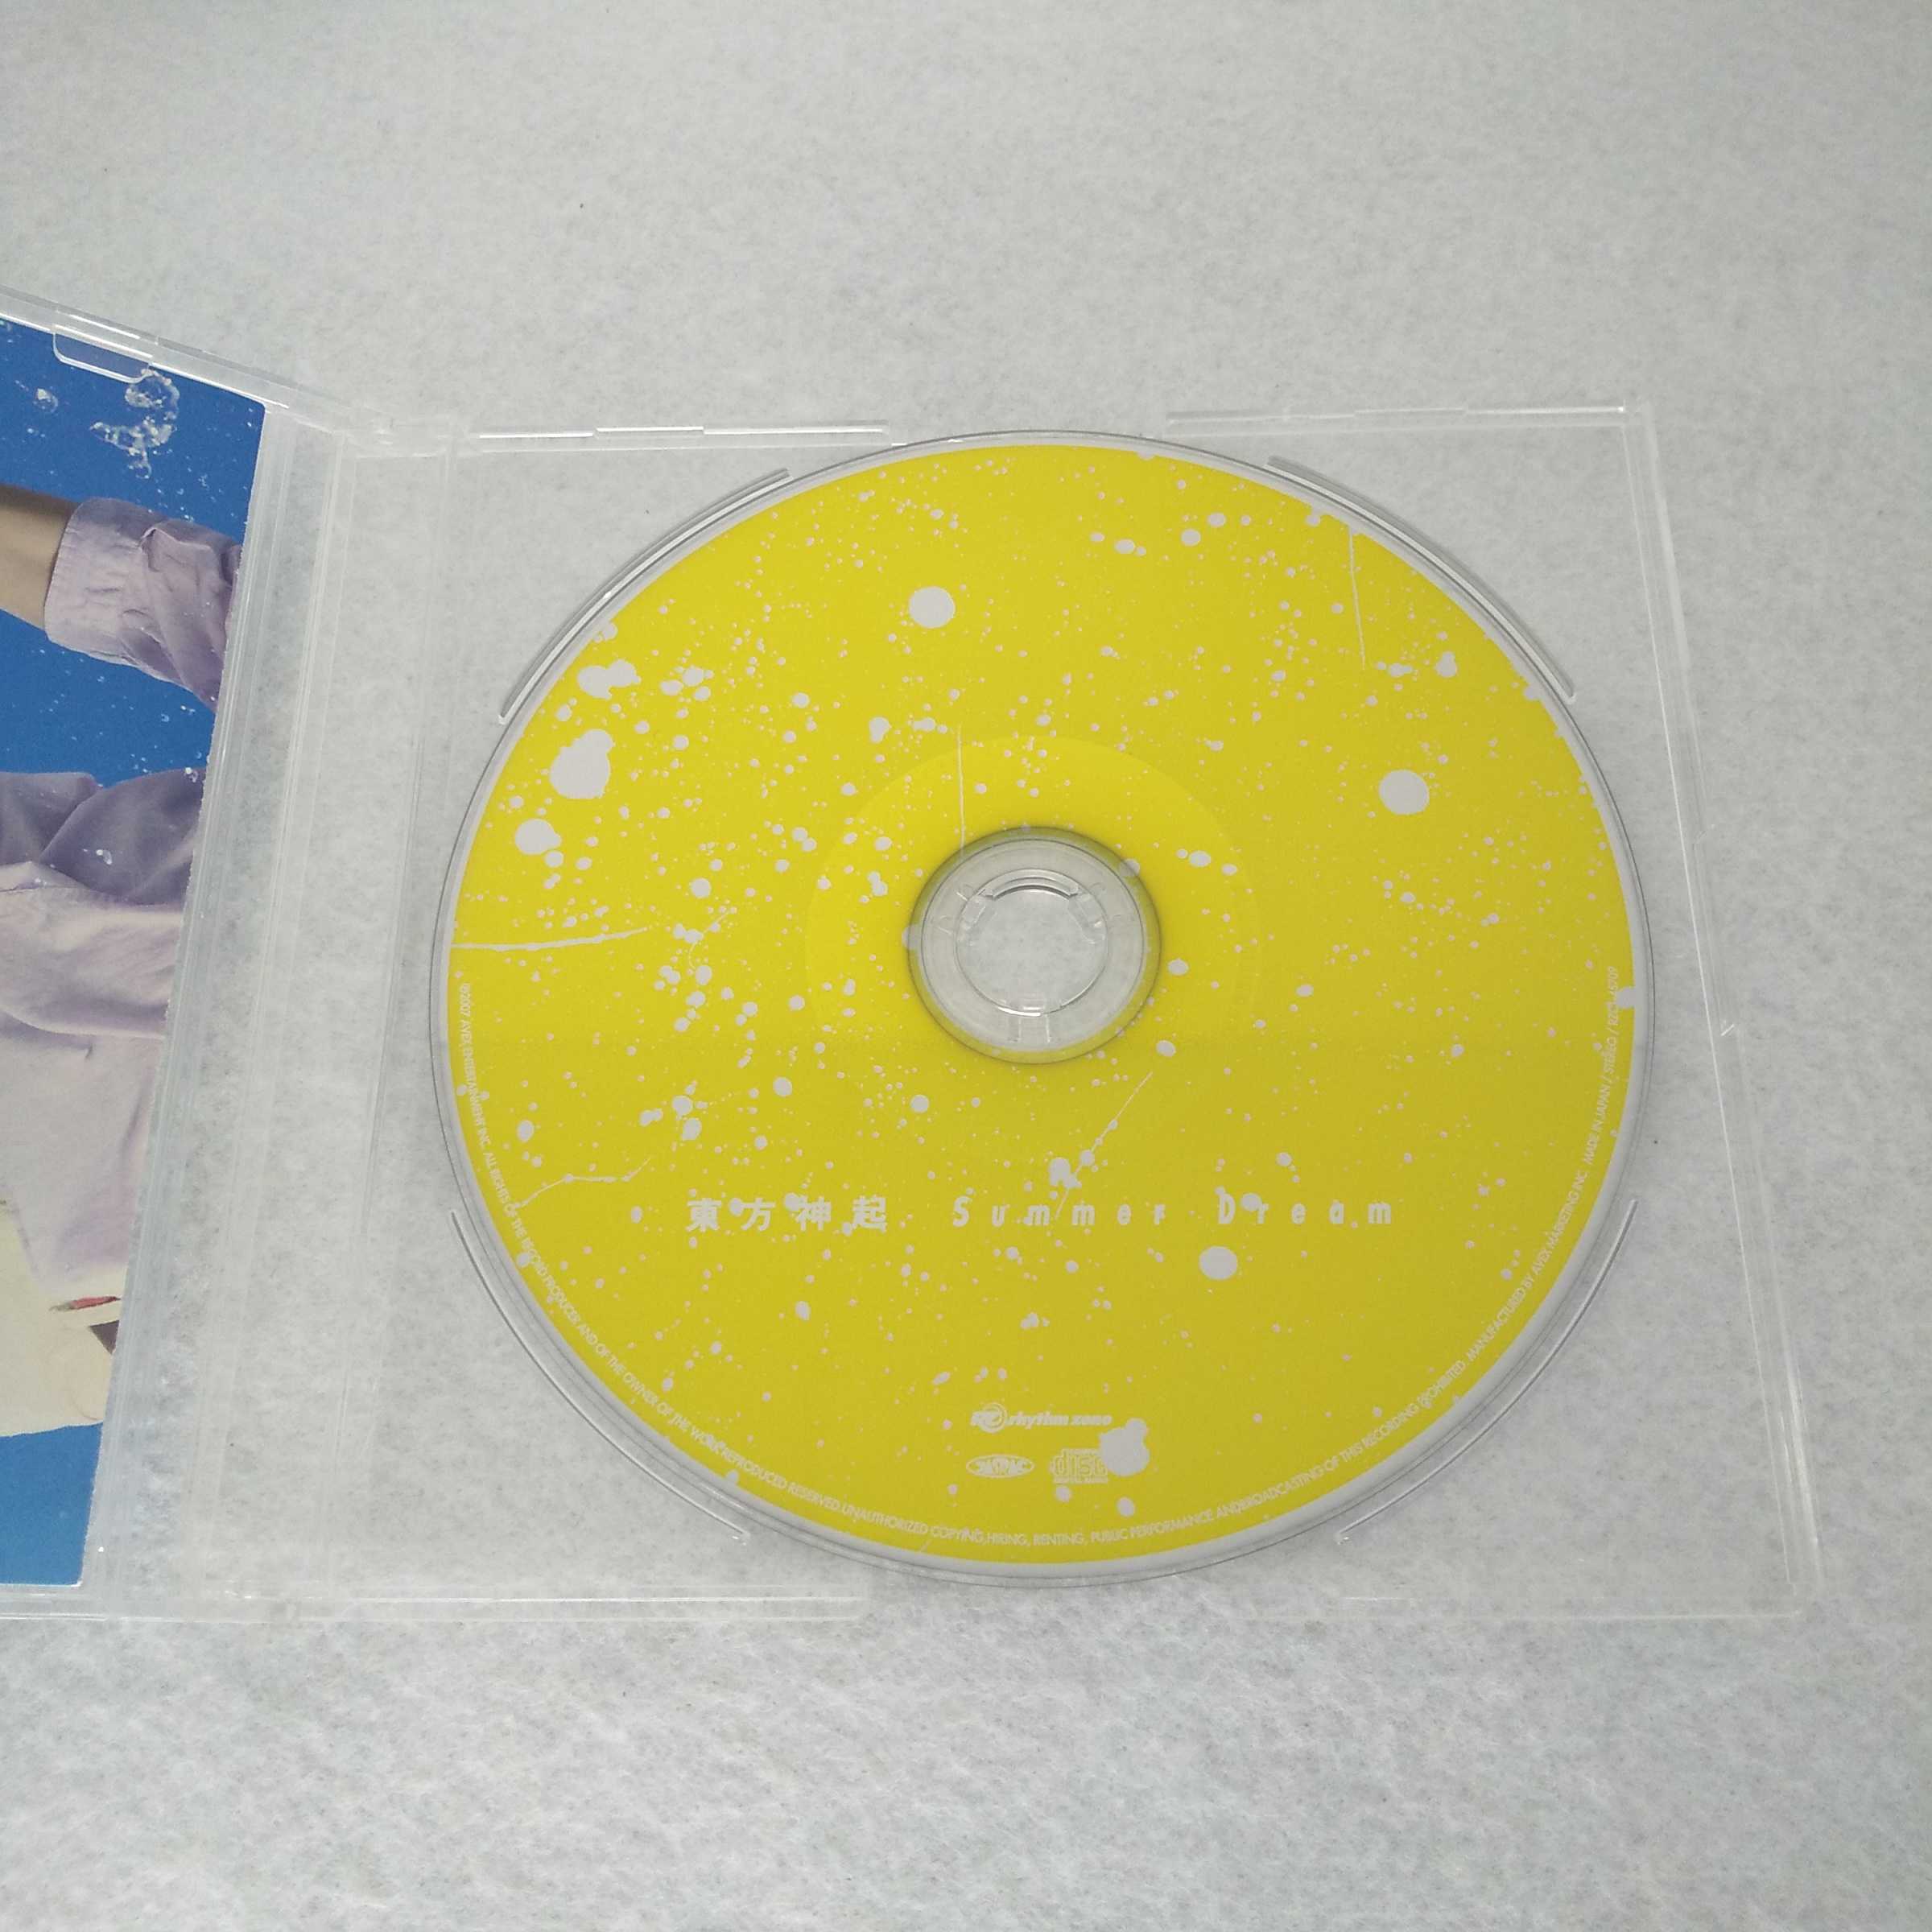 AC10004 【中古】 【CD】 Summer Dream/東方神起